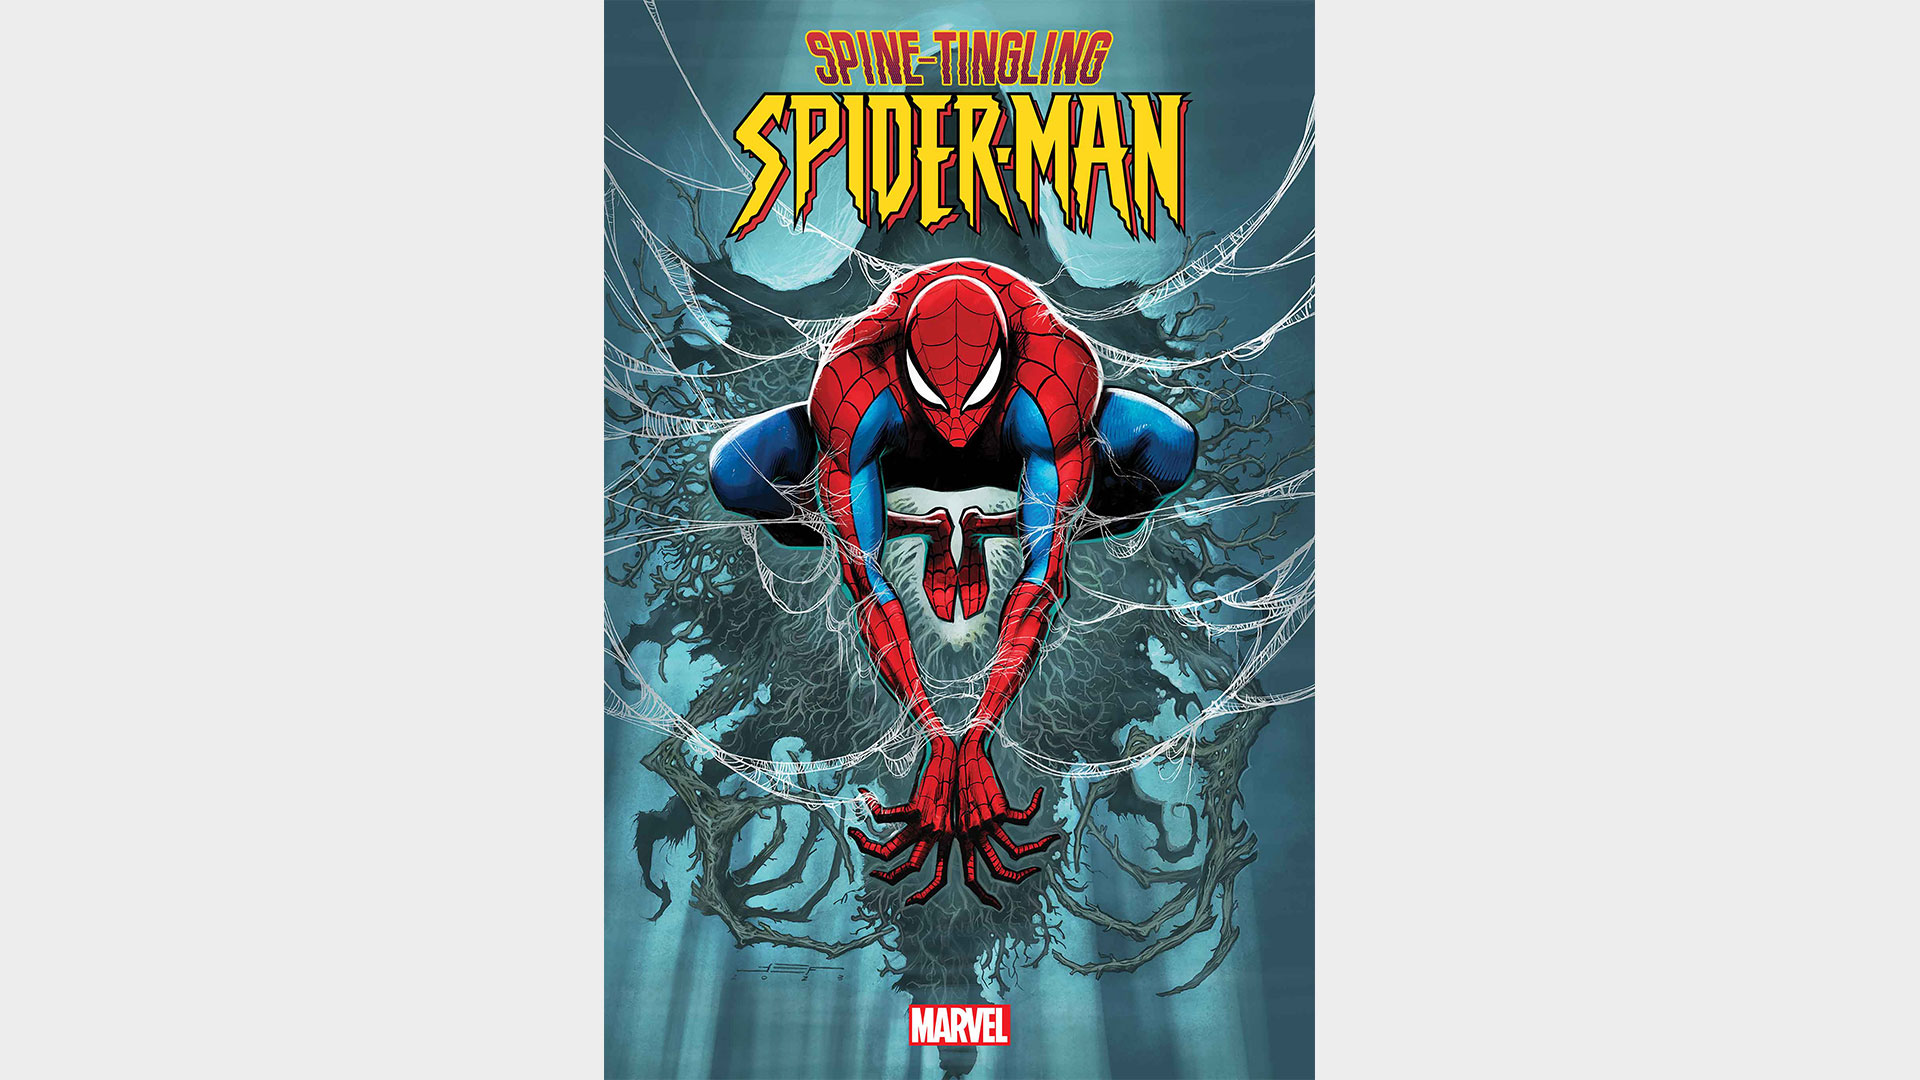 Spider-Man #0 obálka s páteří na zádech